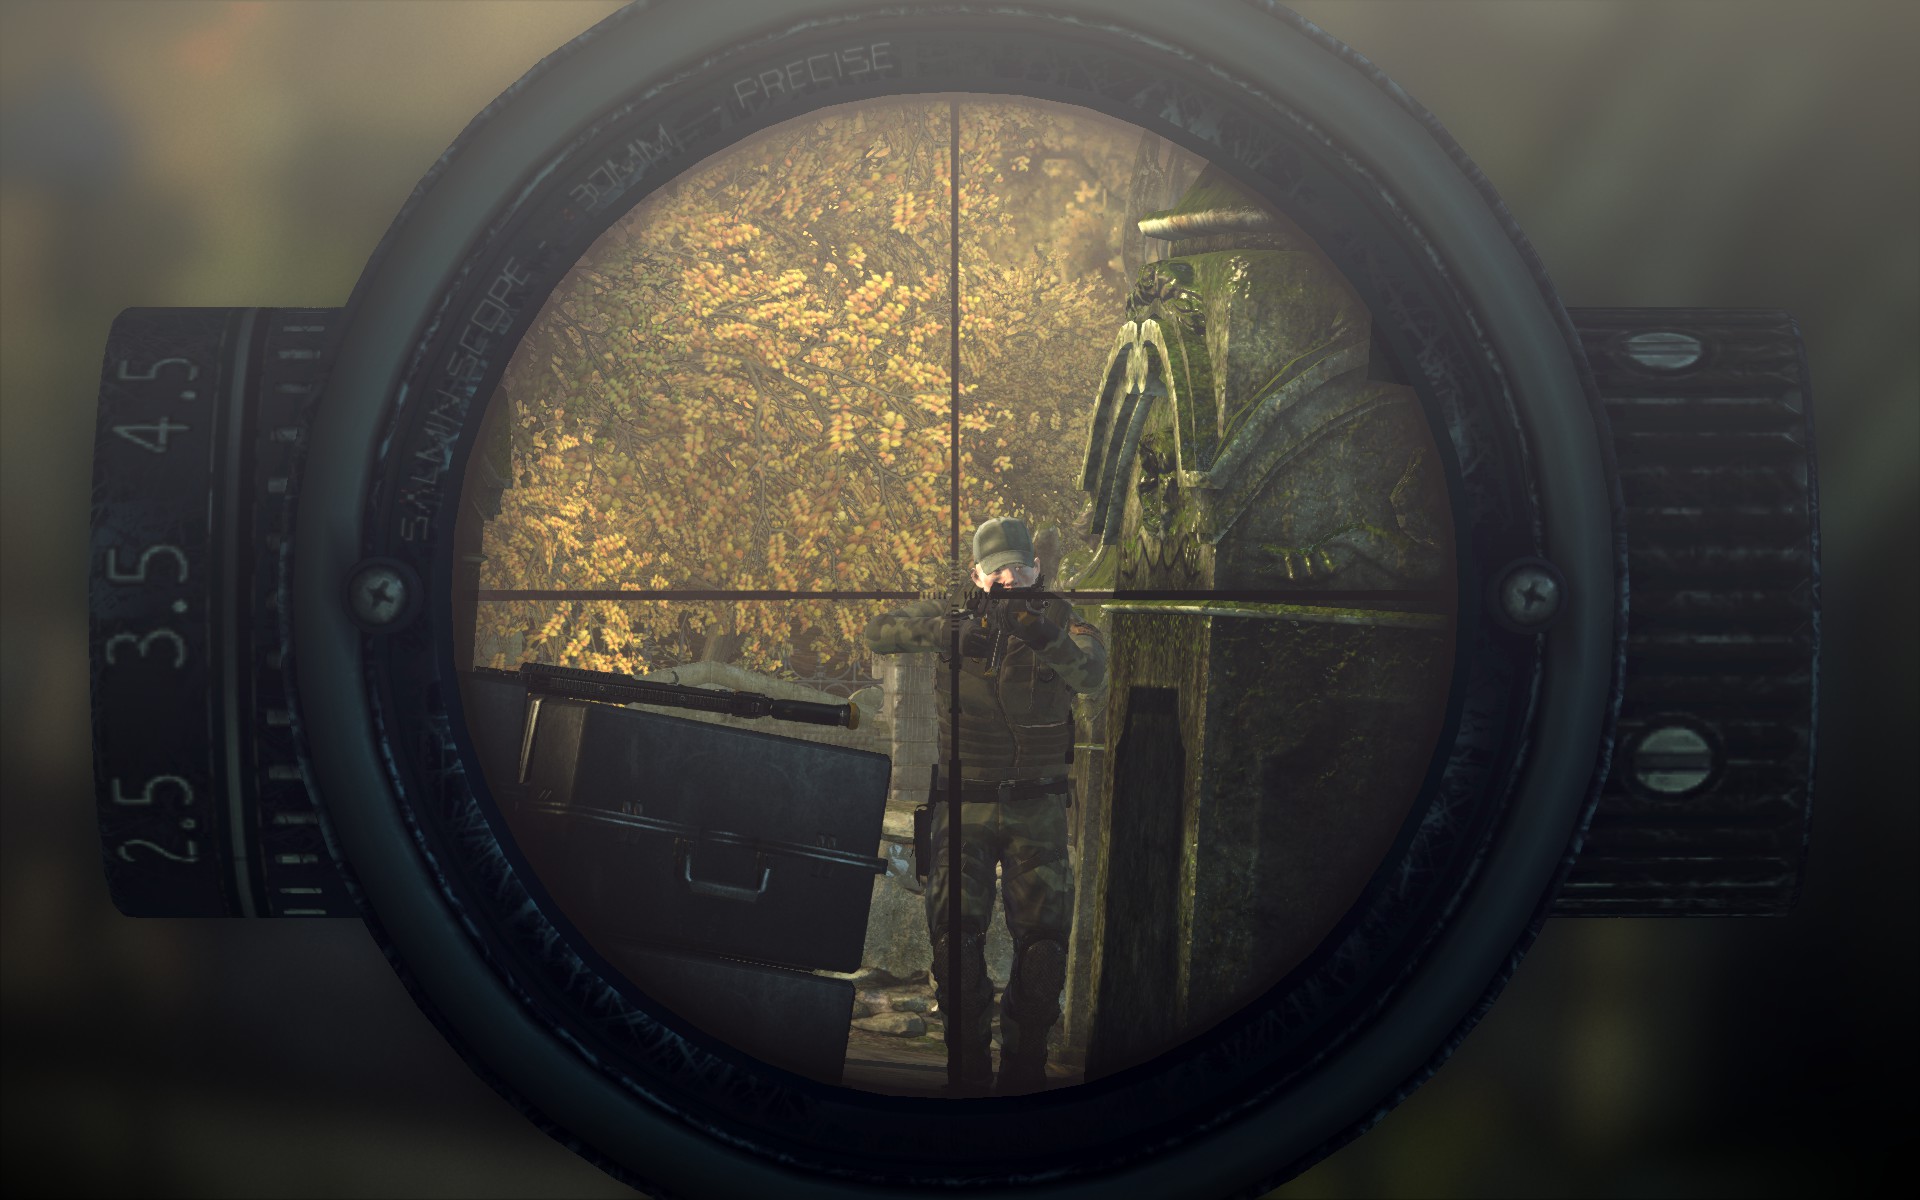 sniper scope wallpaper hd